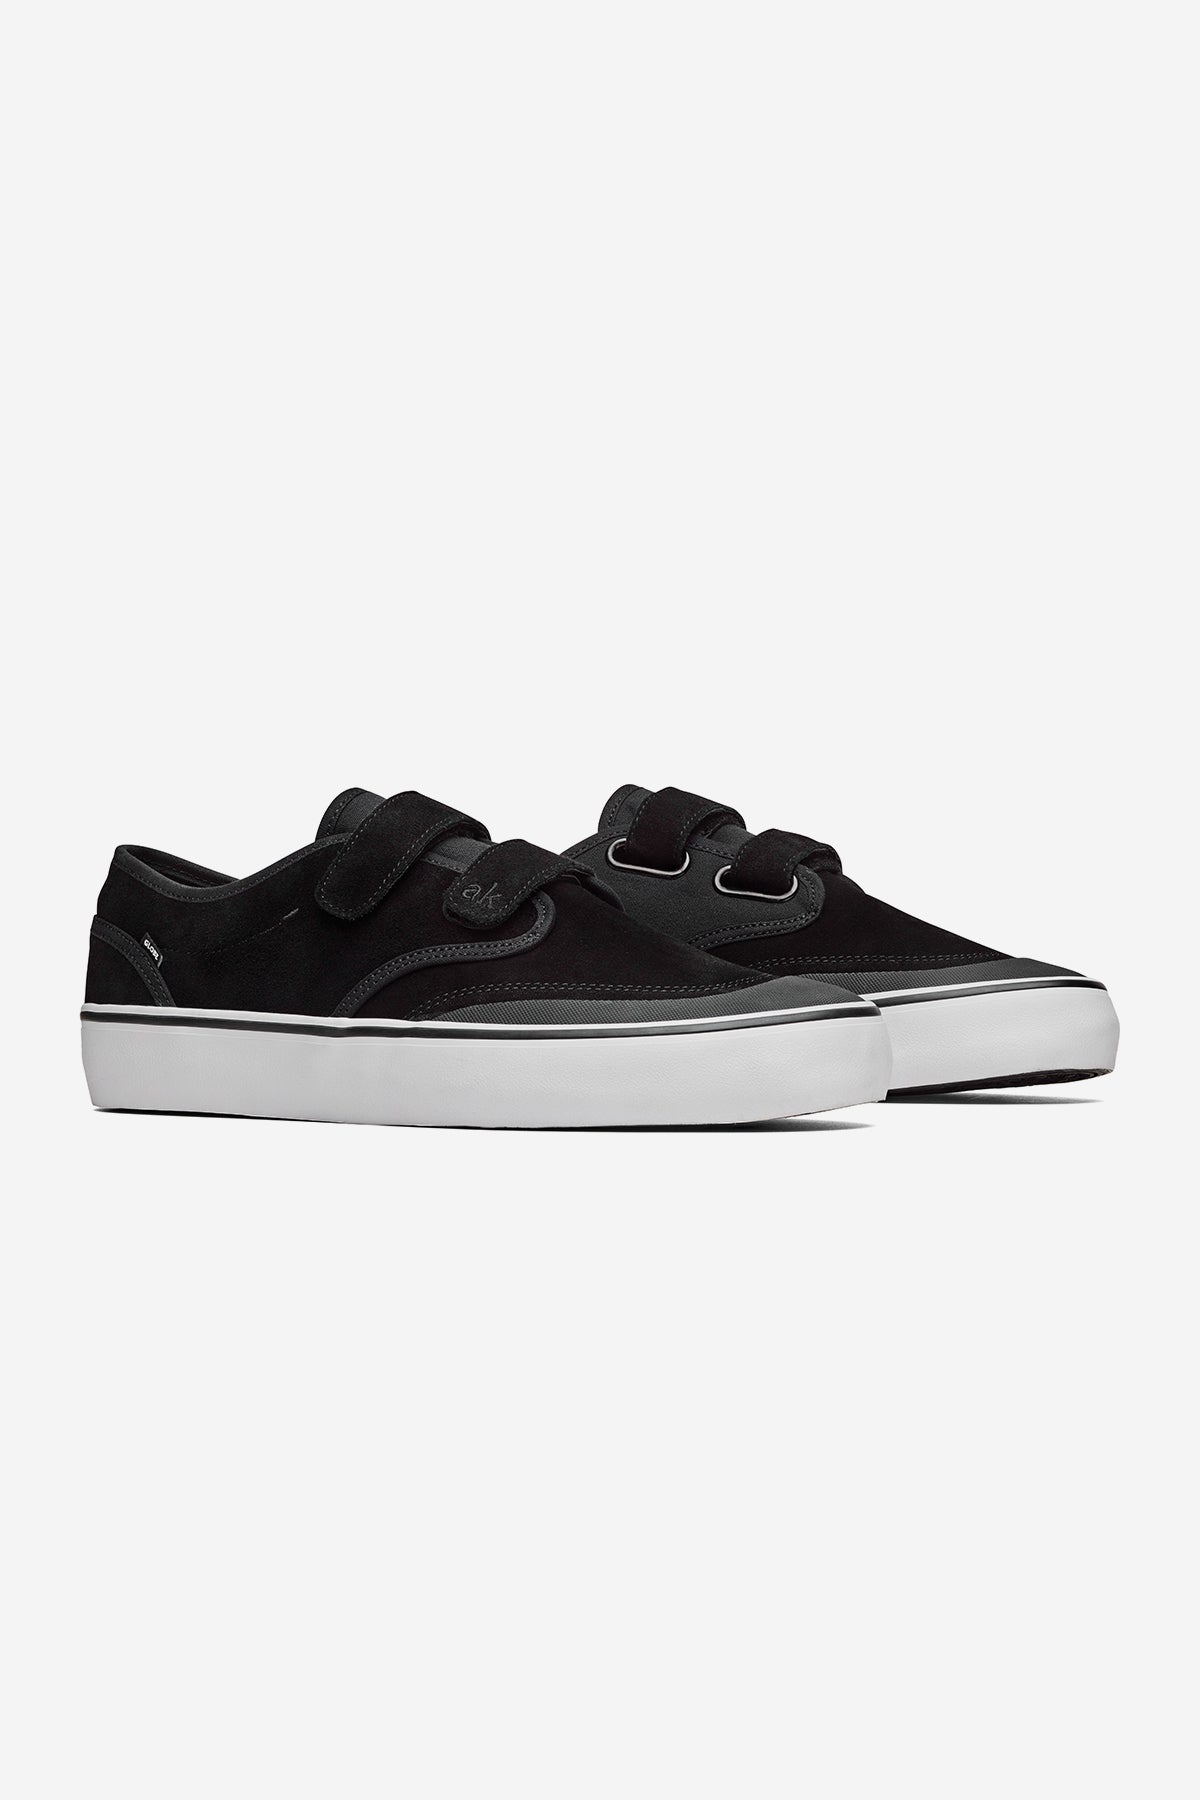 Globe - Motley Ii Strap - Black/White - skateboard Schuhe